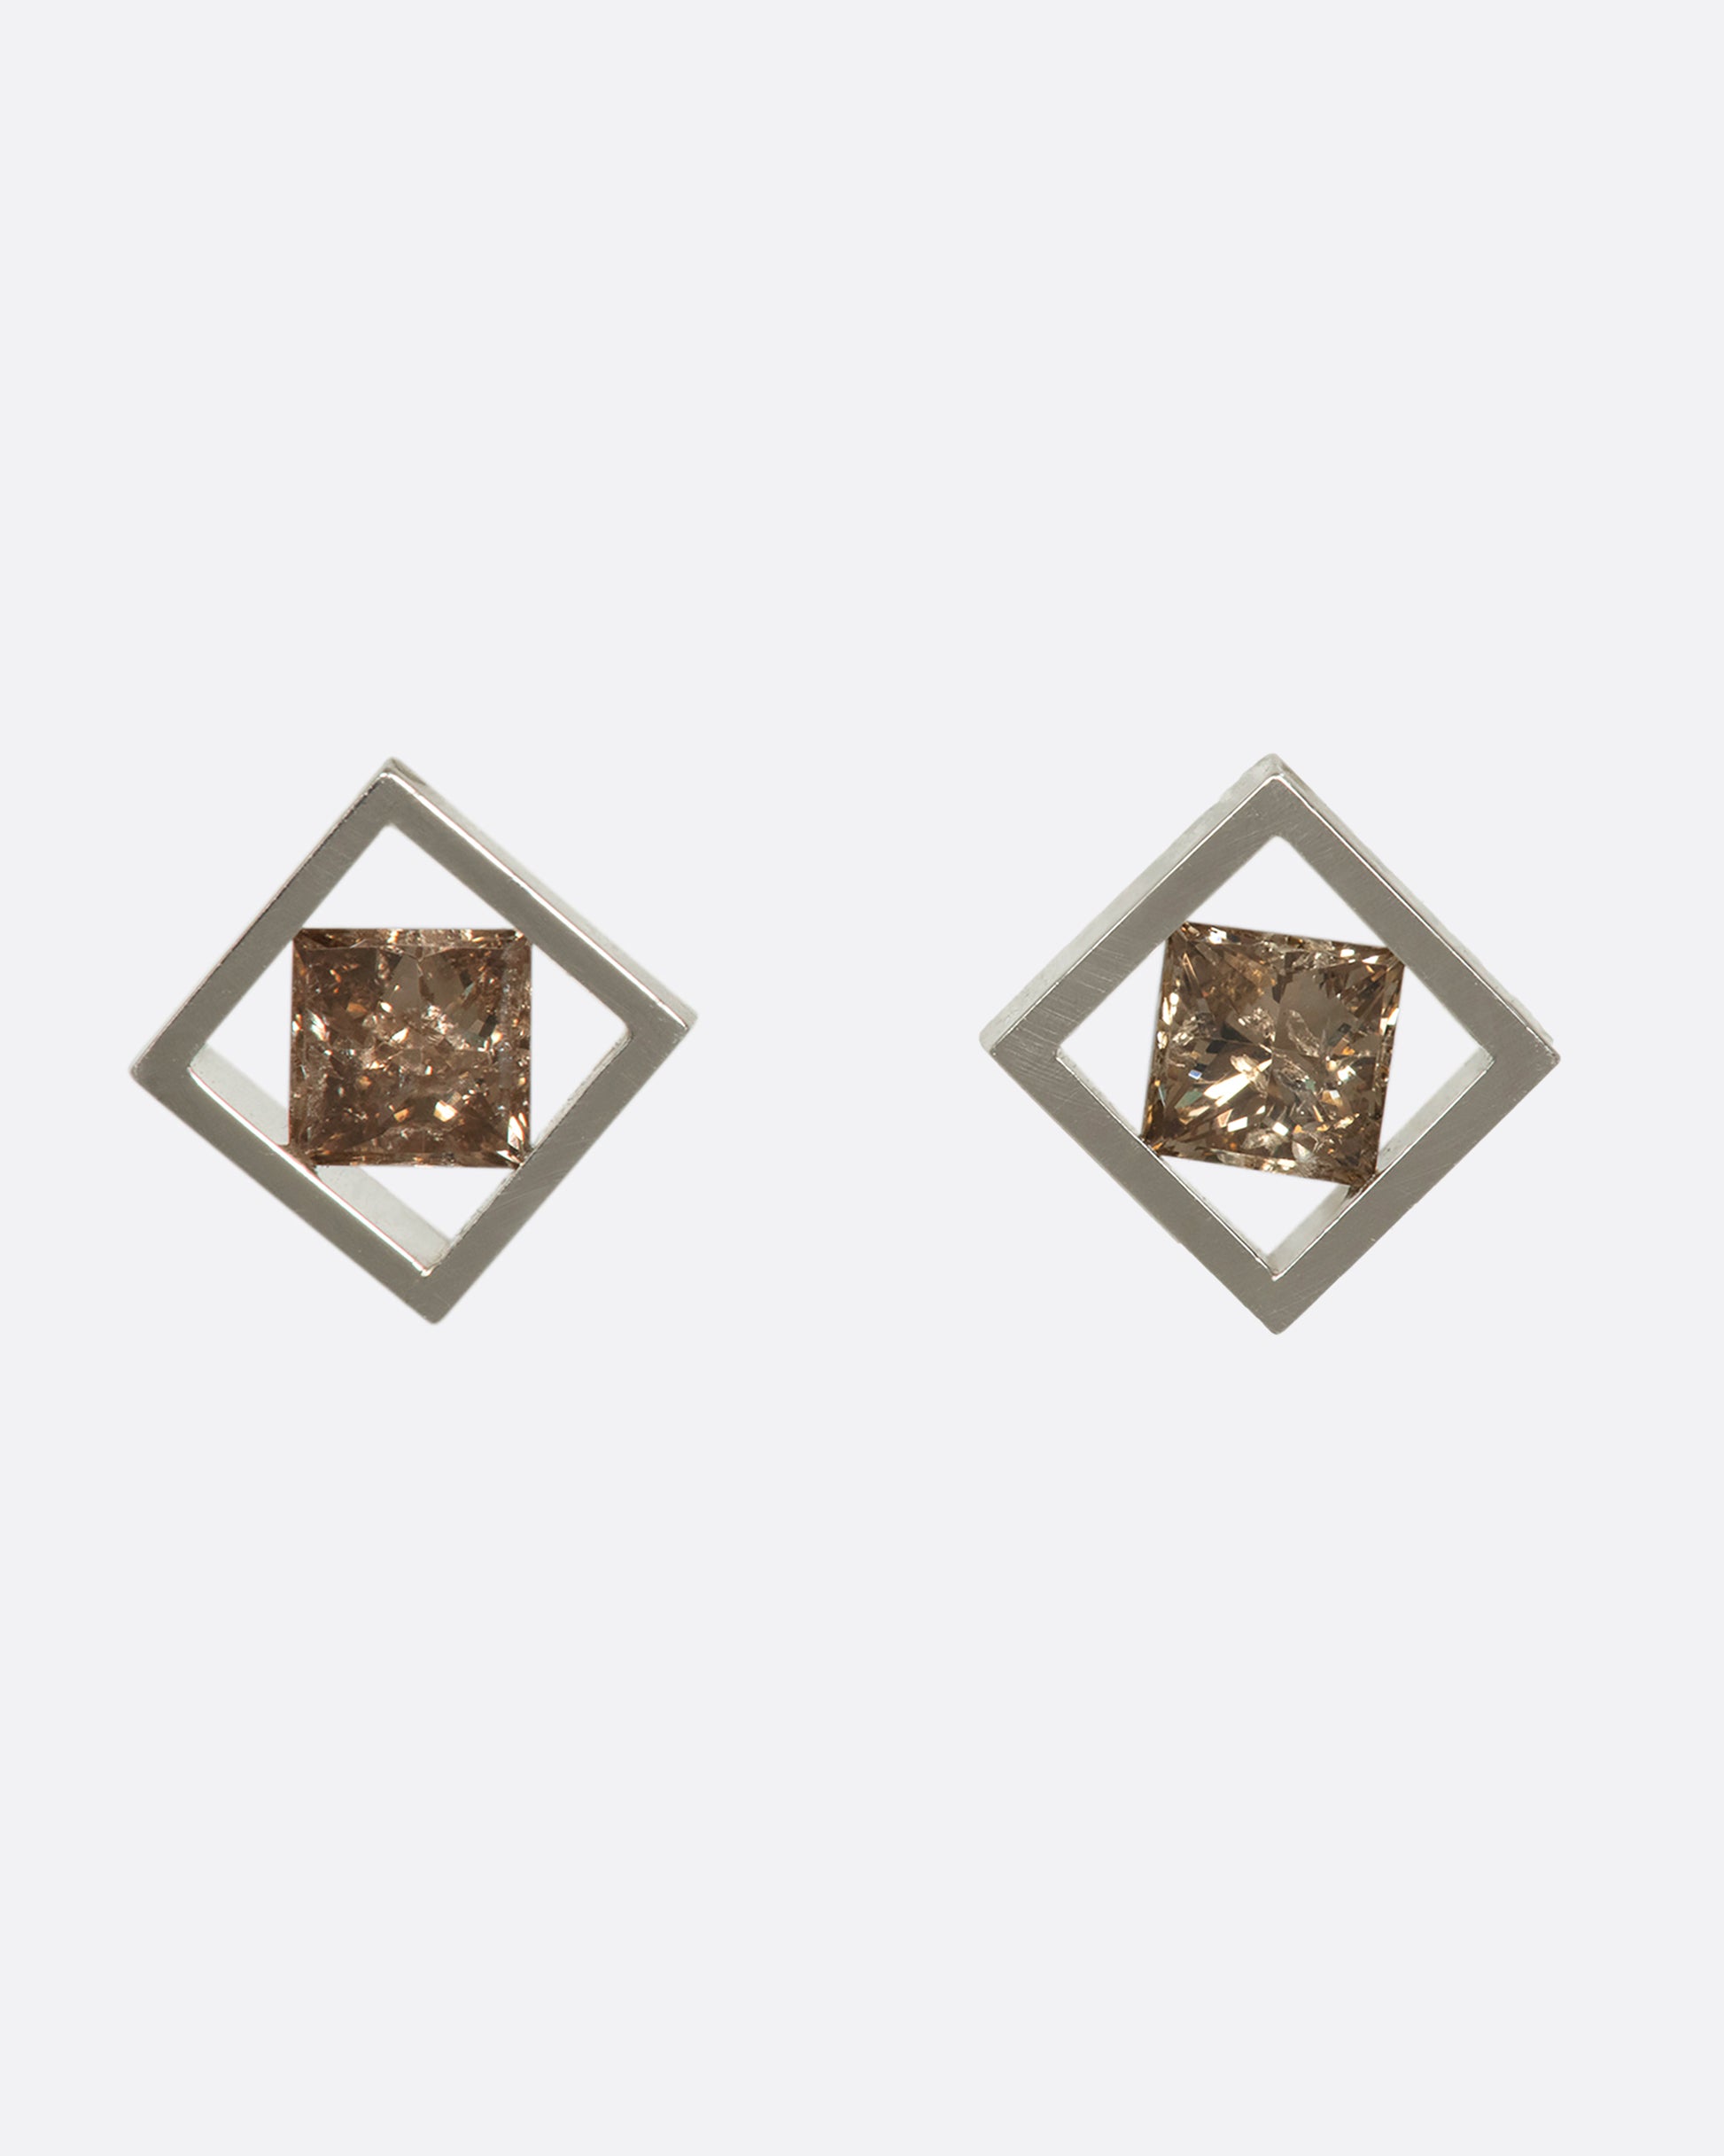 A pair of princess-cut cognac diamonds stretching across a square platinum setting